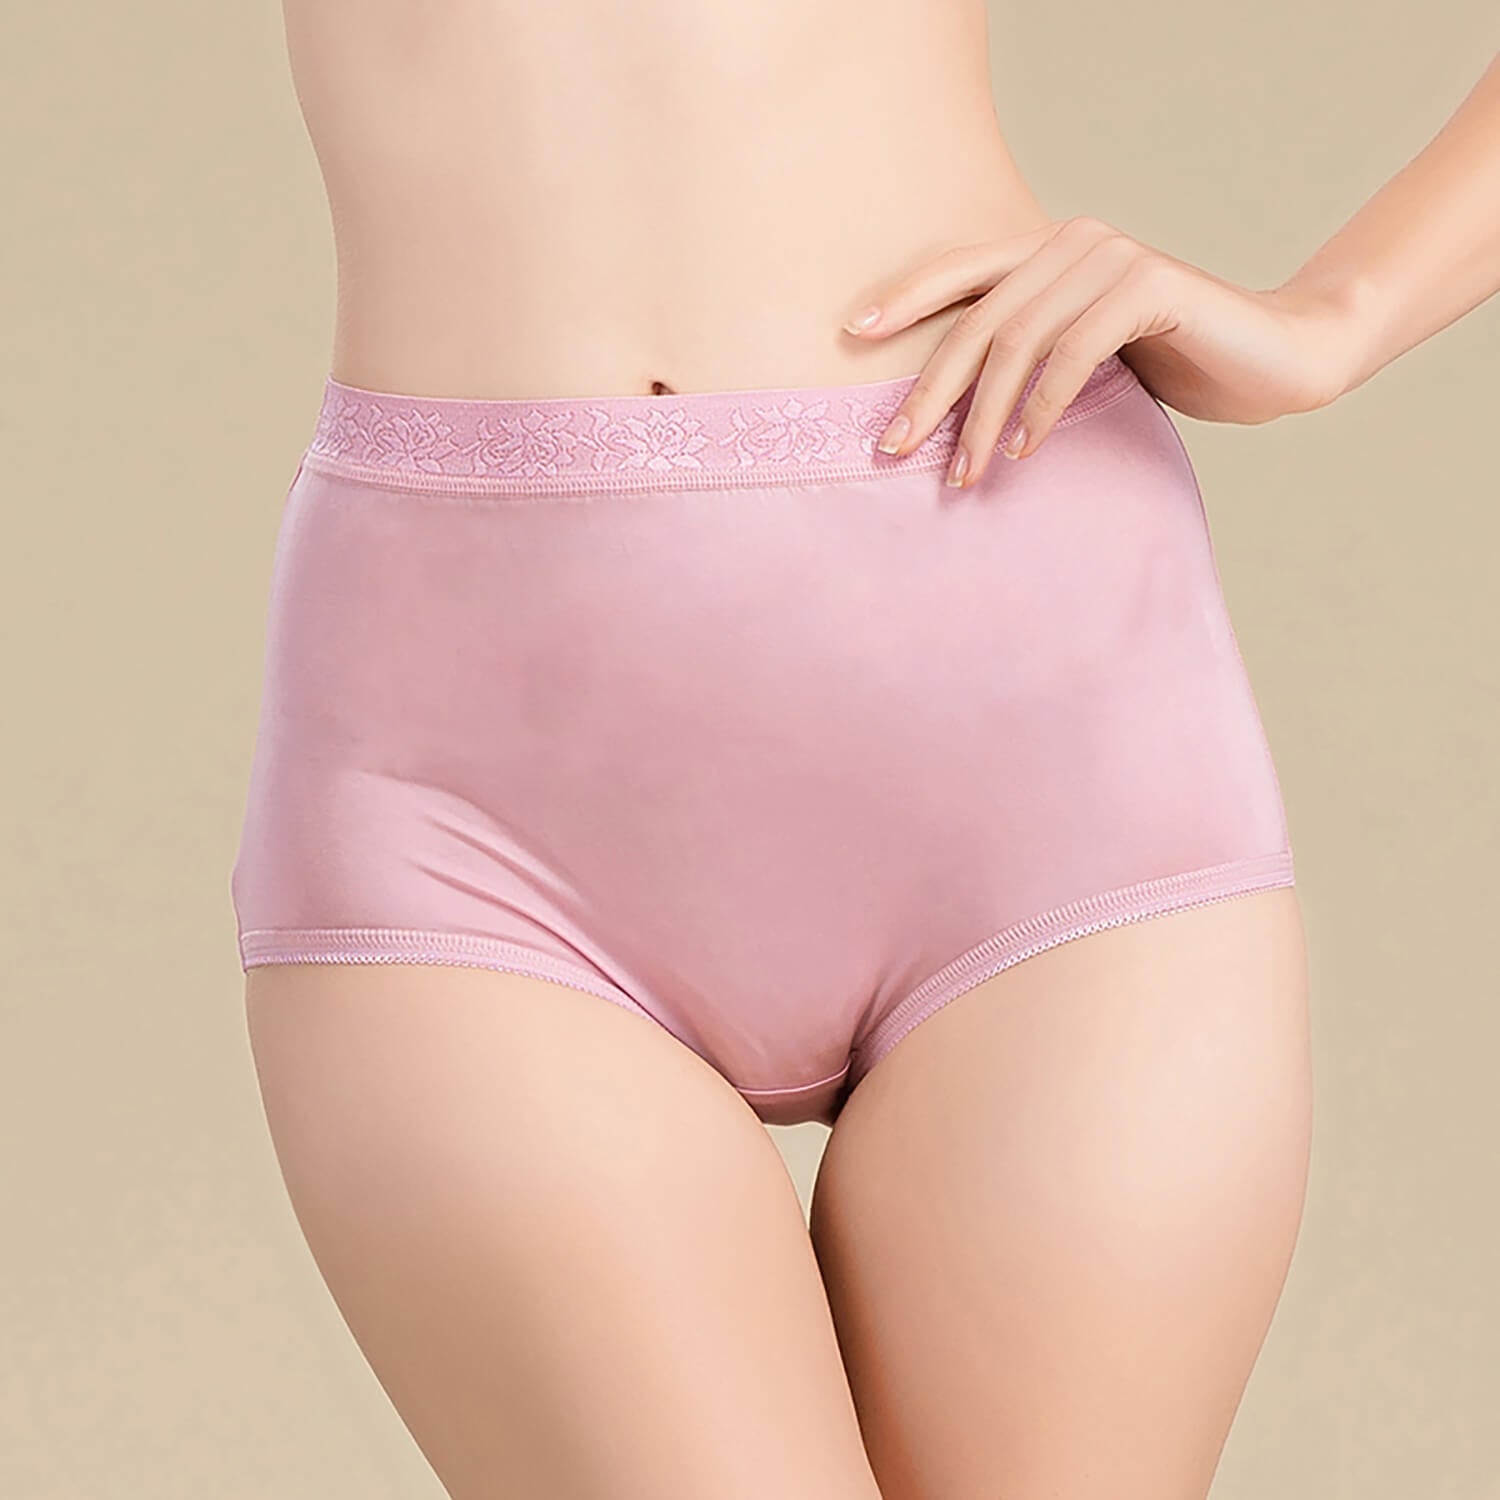 Women's silk high waist briefs, comfortable and breathable mulberry silk briefs - slipintosoft